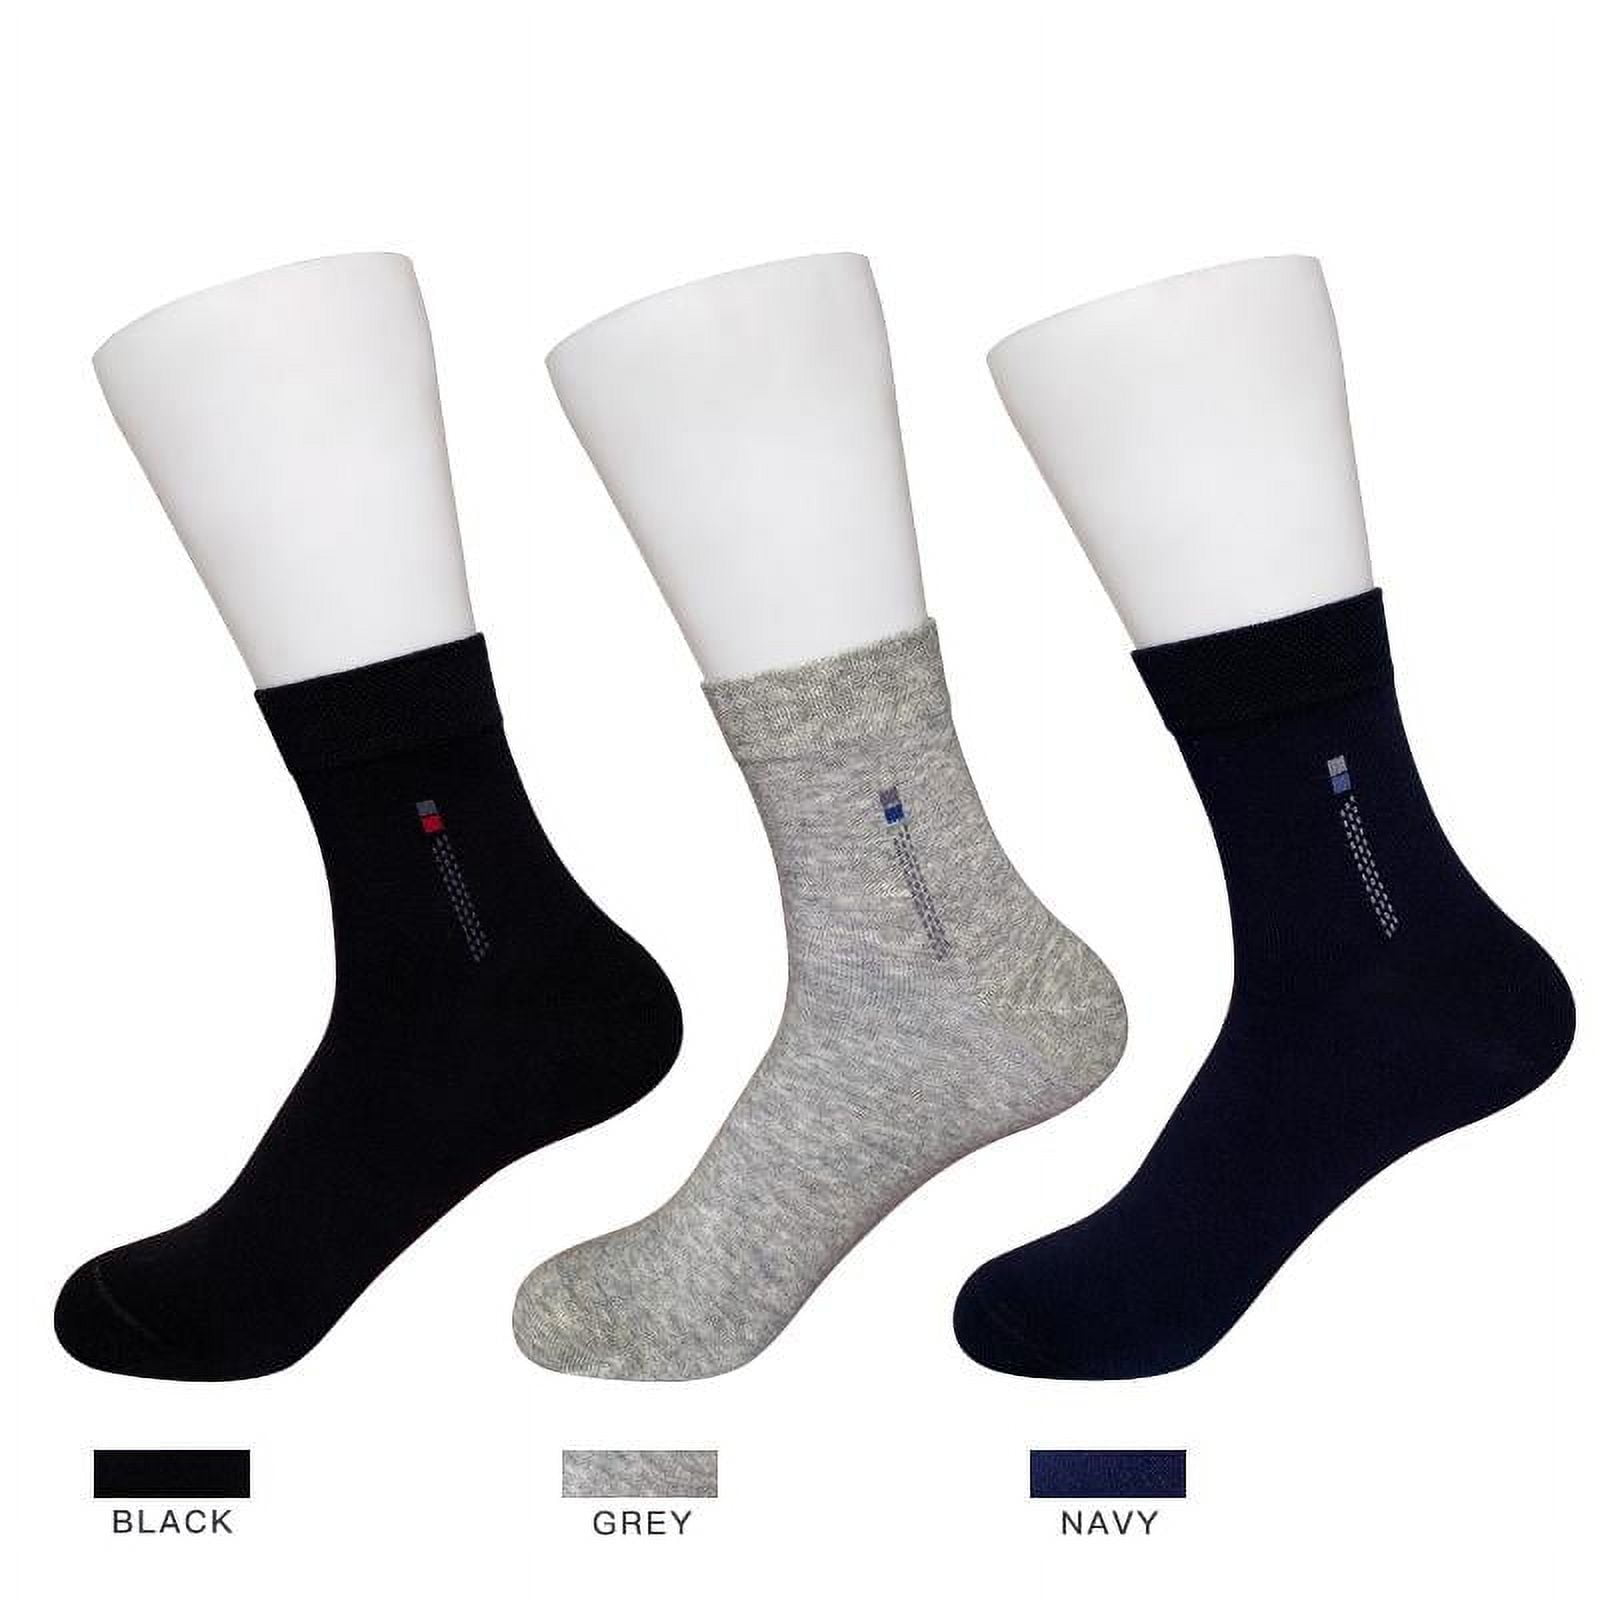 mens dress socks size 13 15